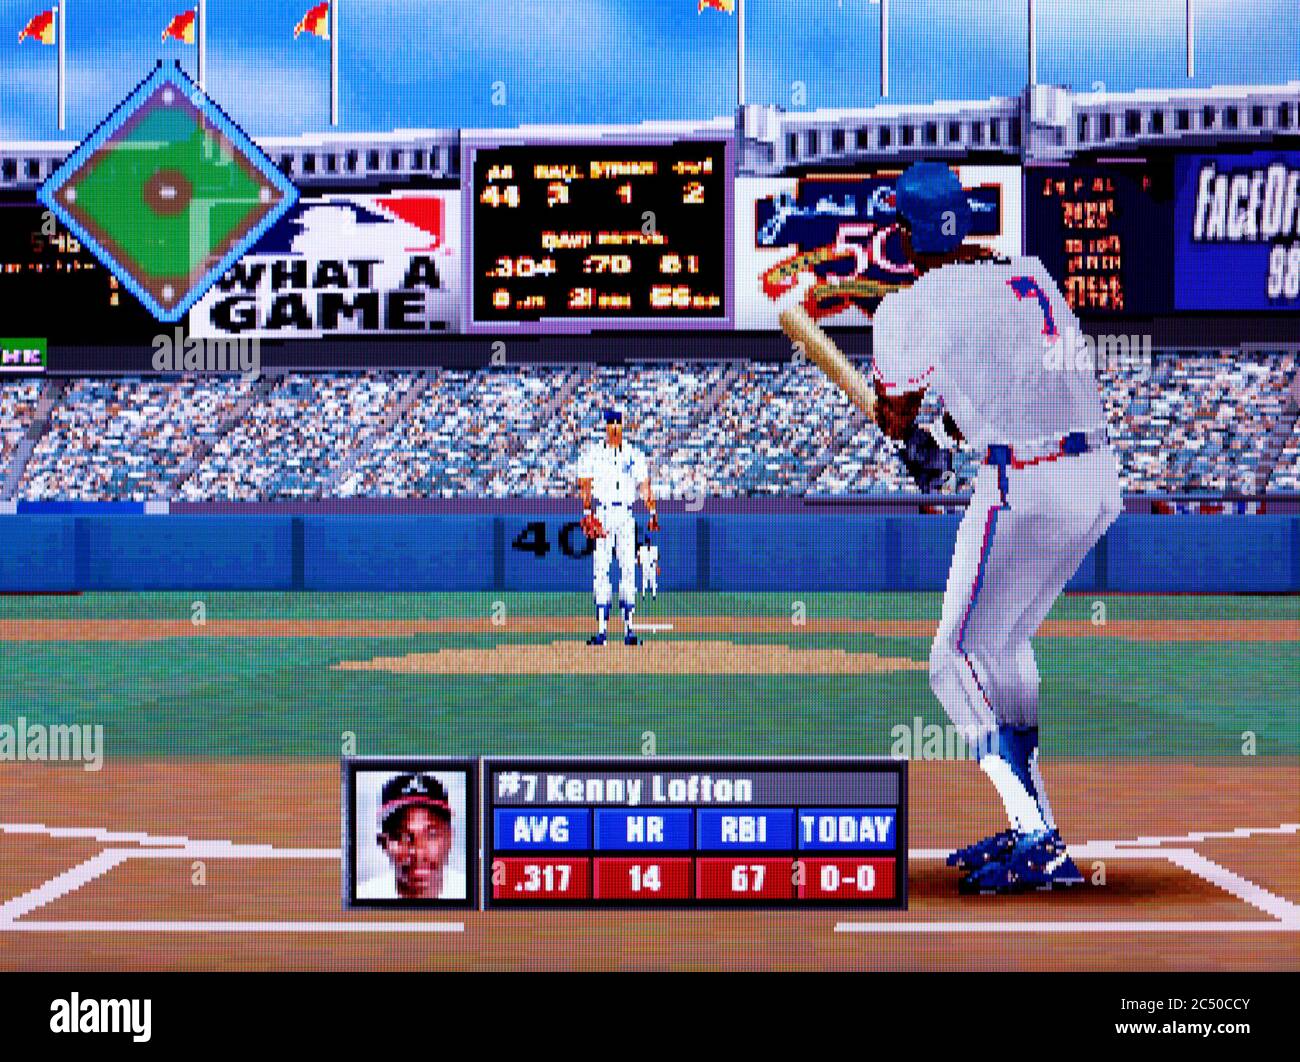 MLB 98 - Sony PlayStation 1 PS1 PSX - usage éditorial uniquement Banque D'Images